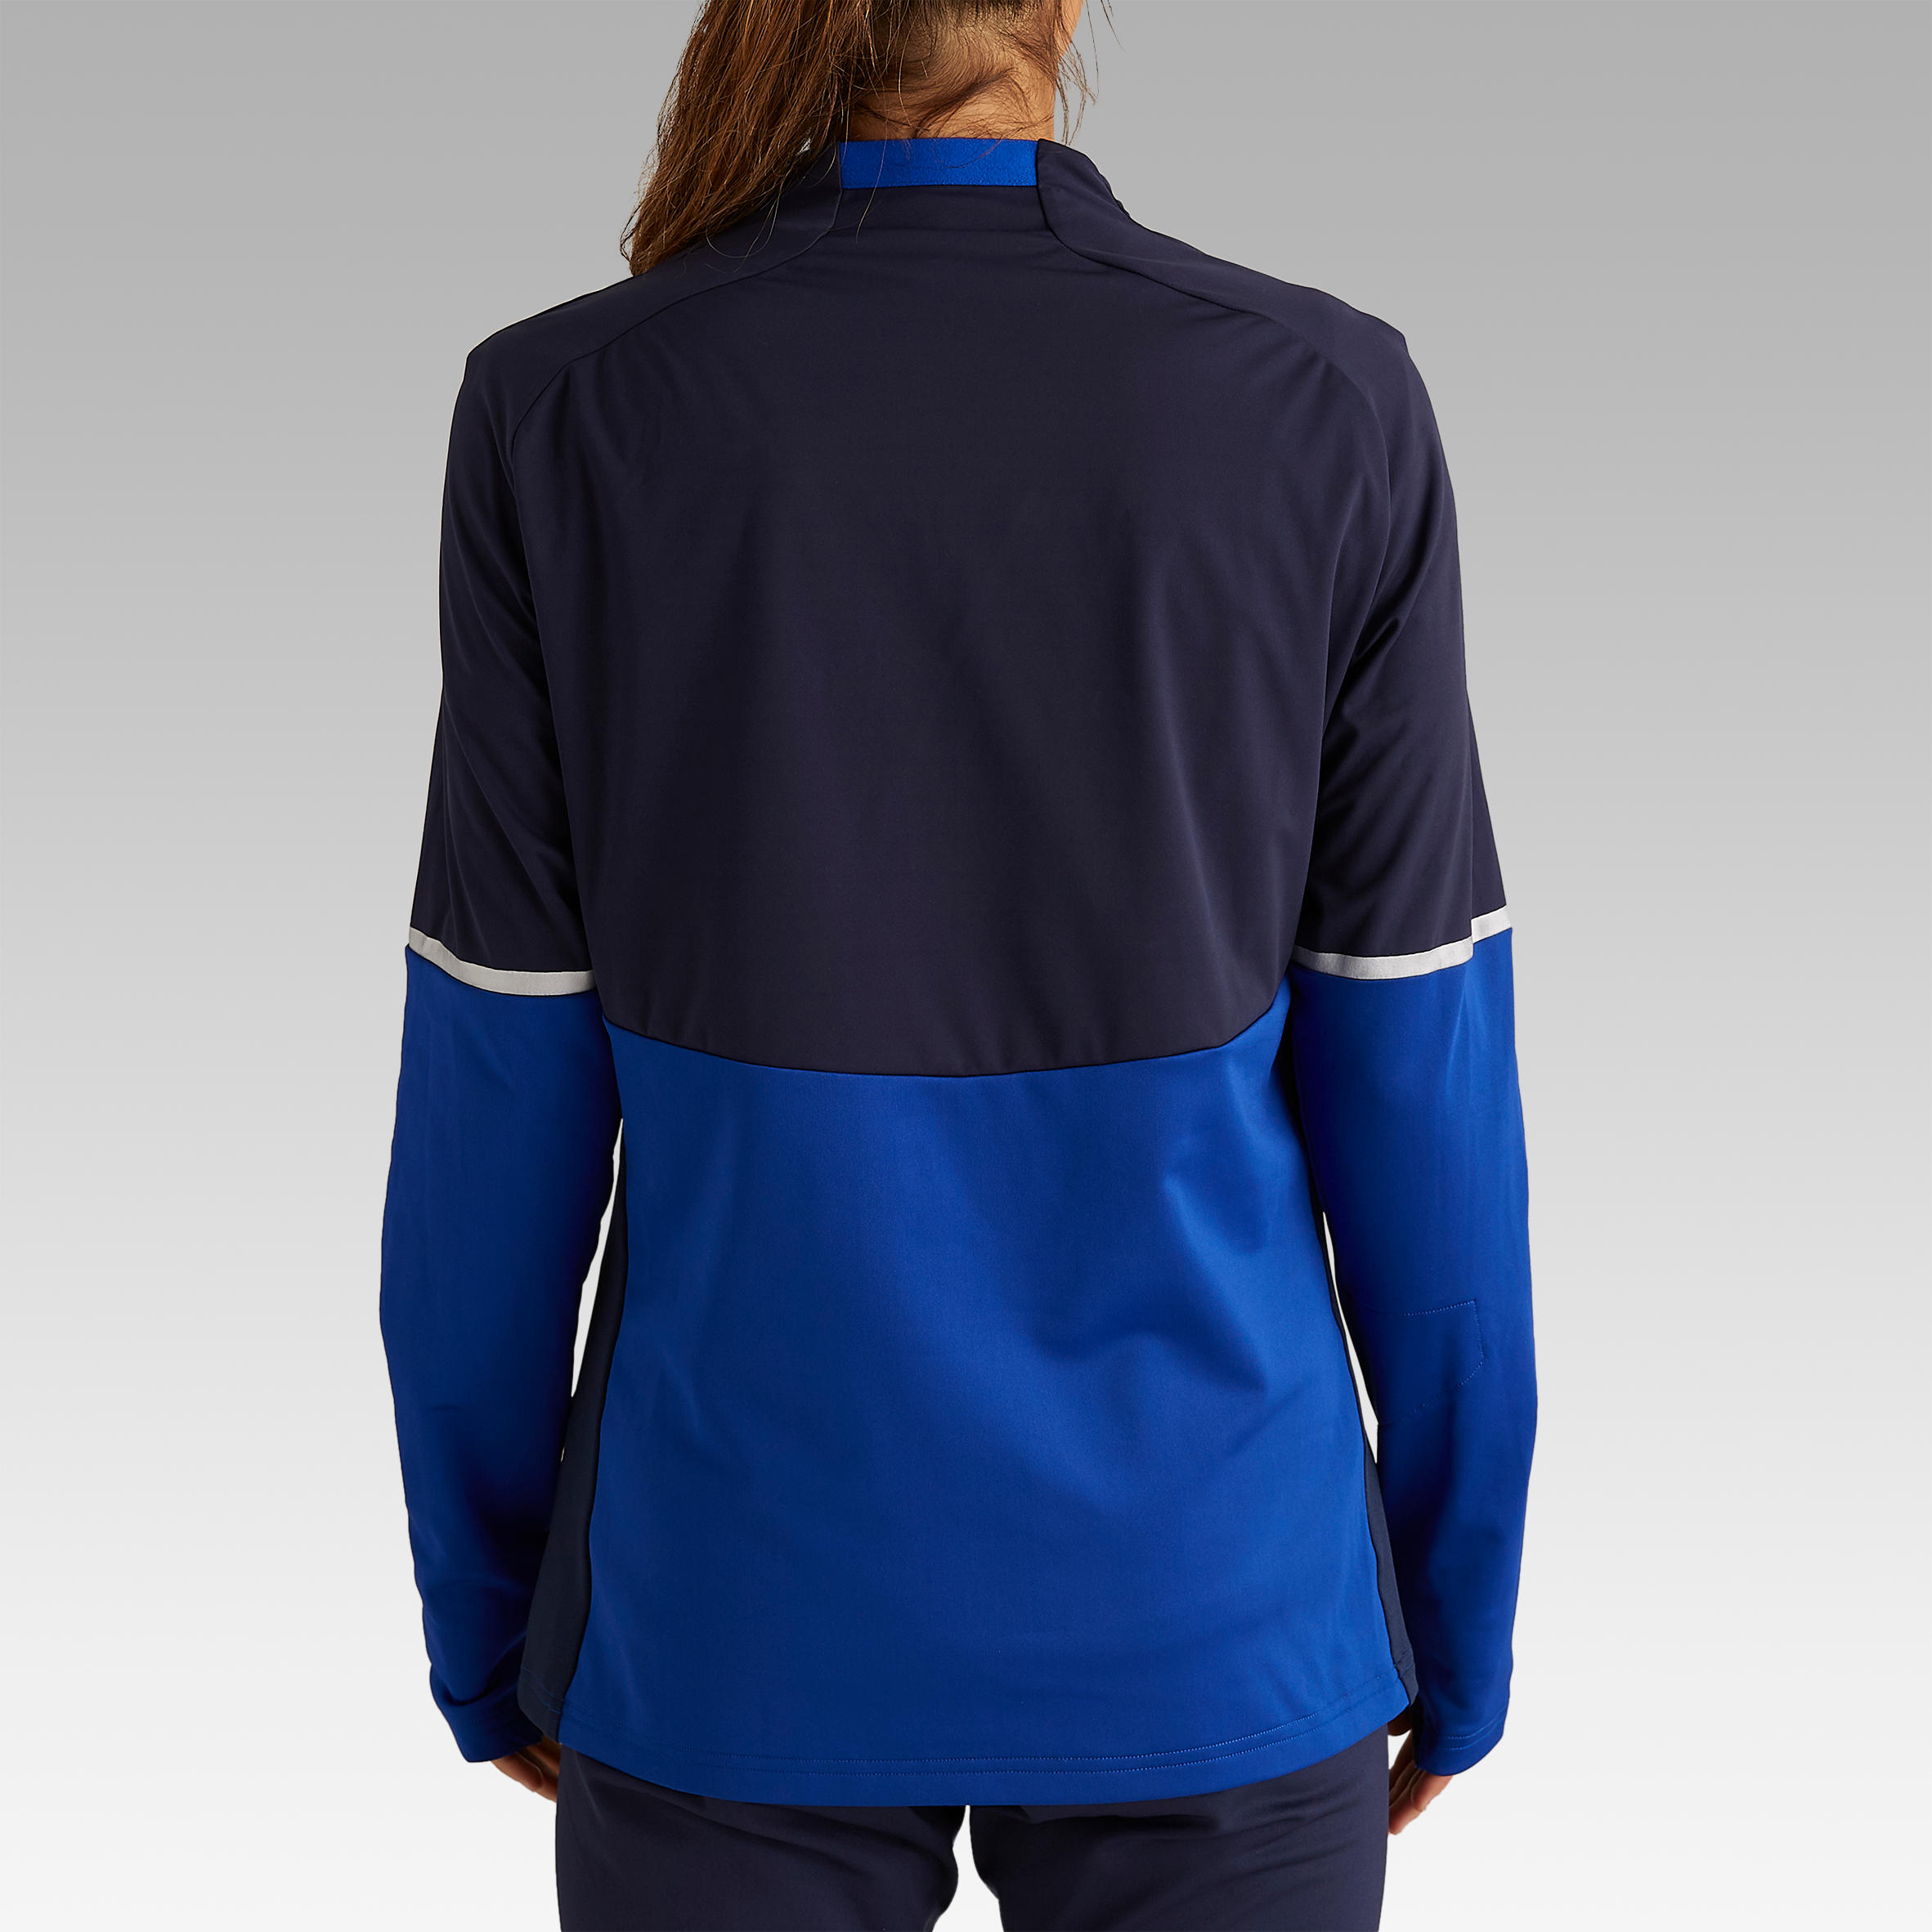 T500 Women's Football Training Sweatshirt - Blue 4/14